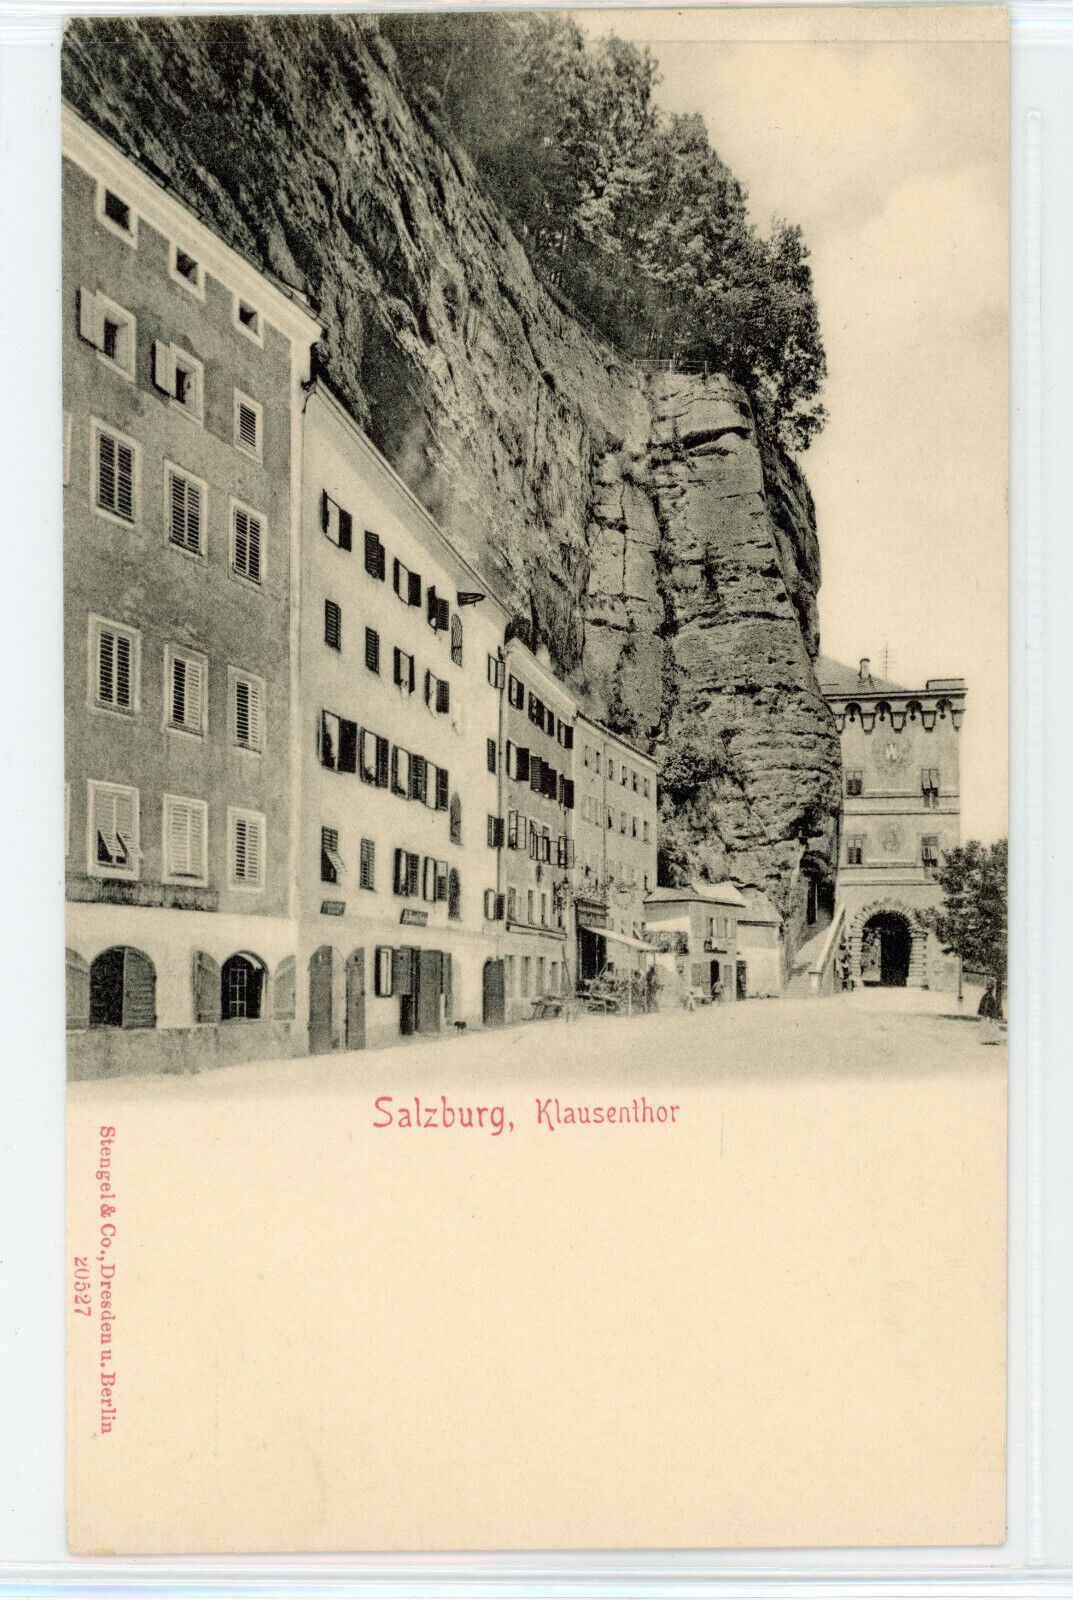 Klausentor Gate, Salzburg, Austria, vintage 1910 postcard